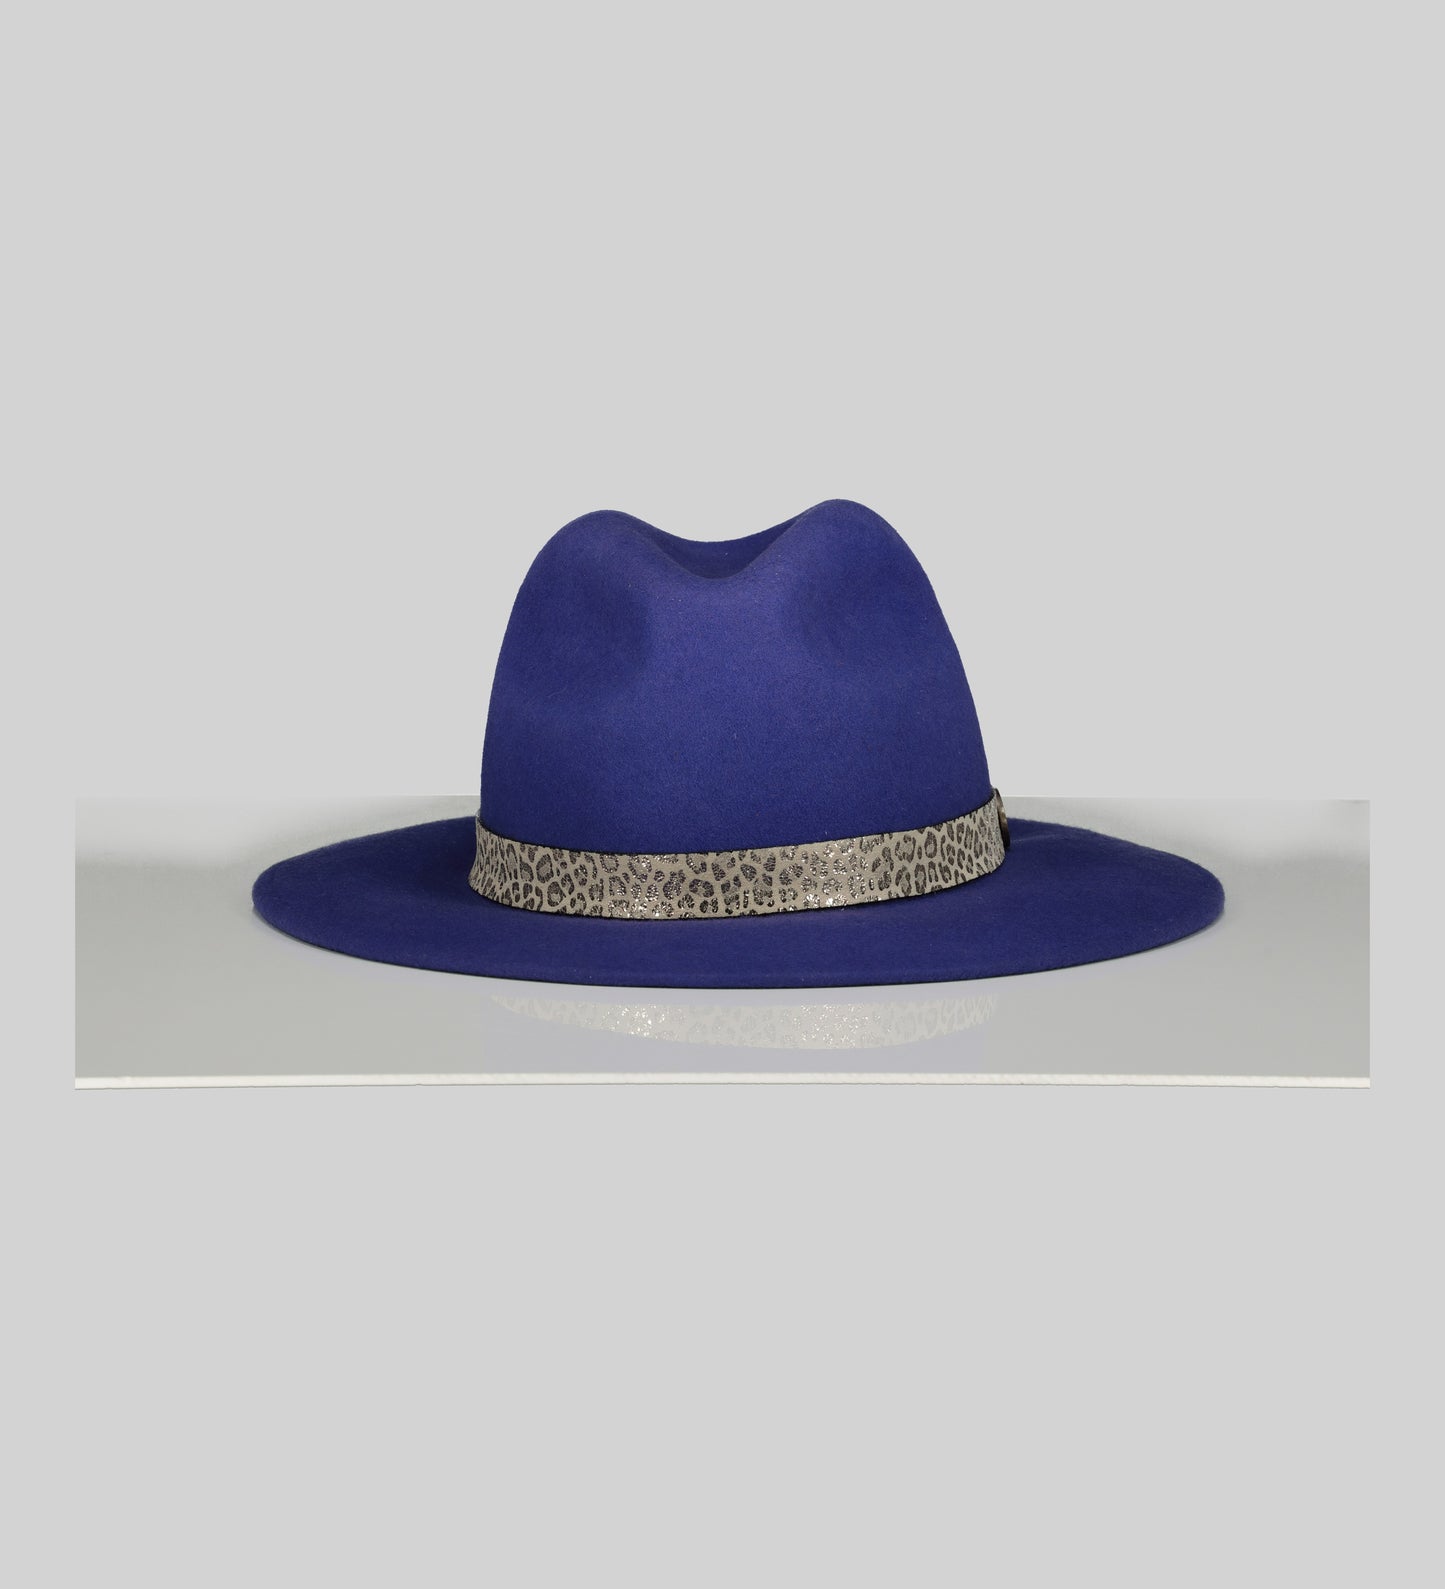 Two-Tone Fedora Hat with Animal Print Trim